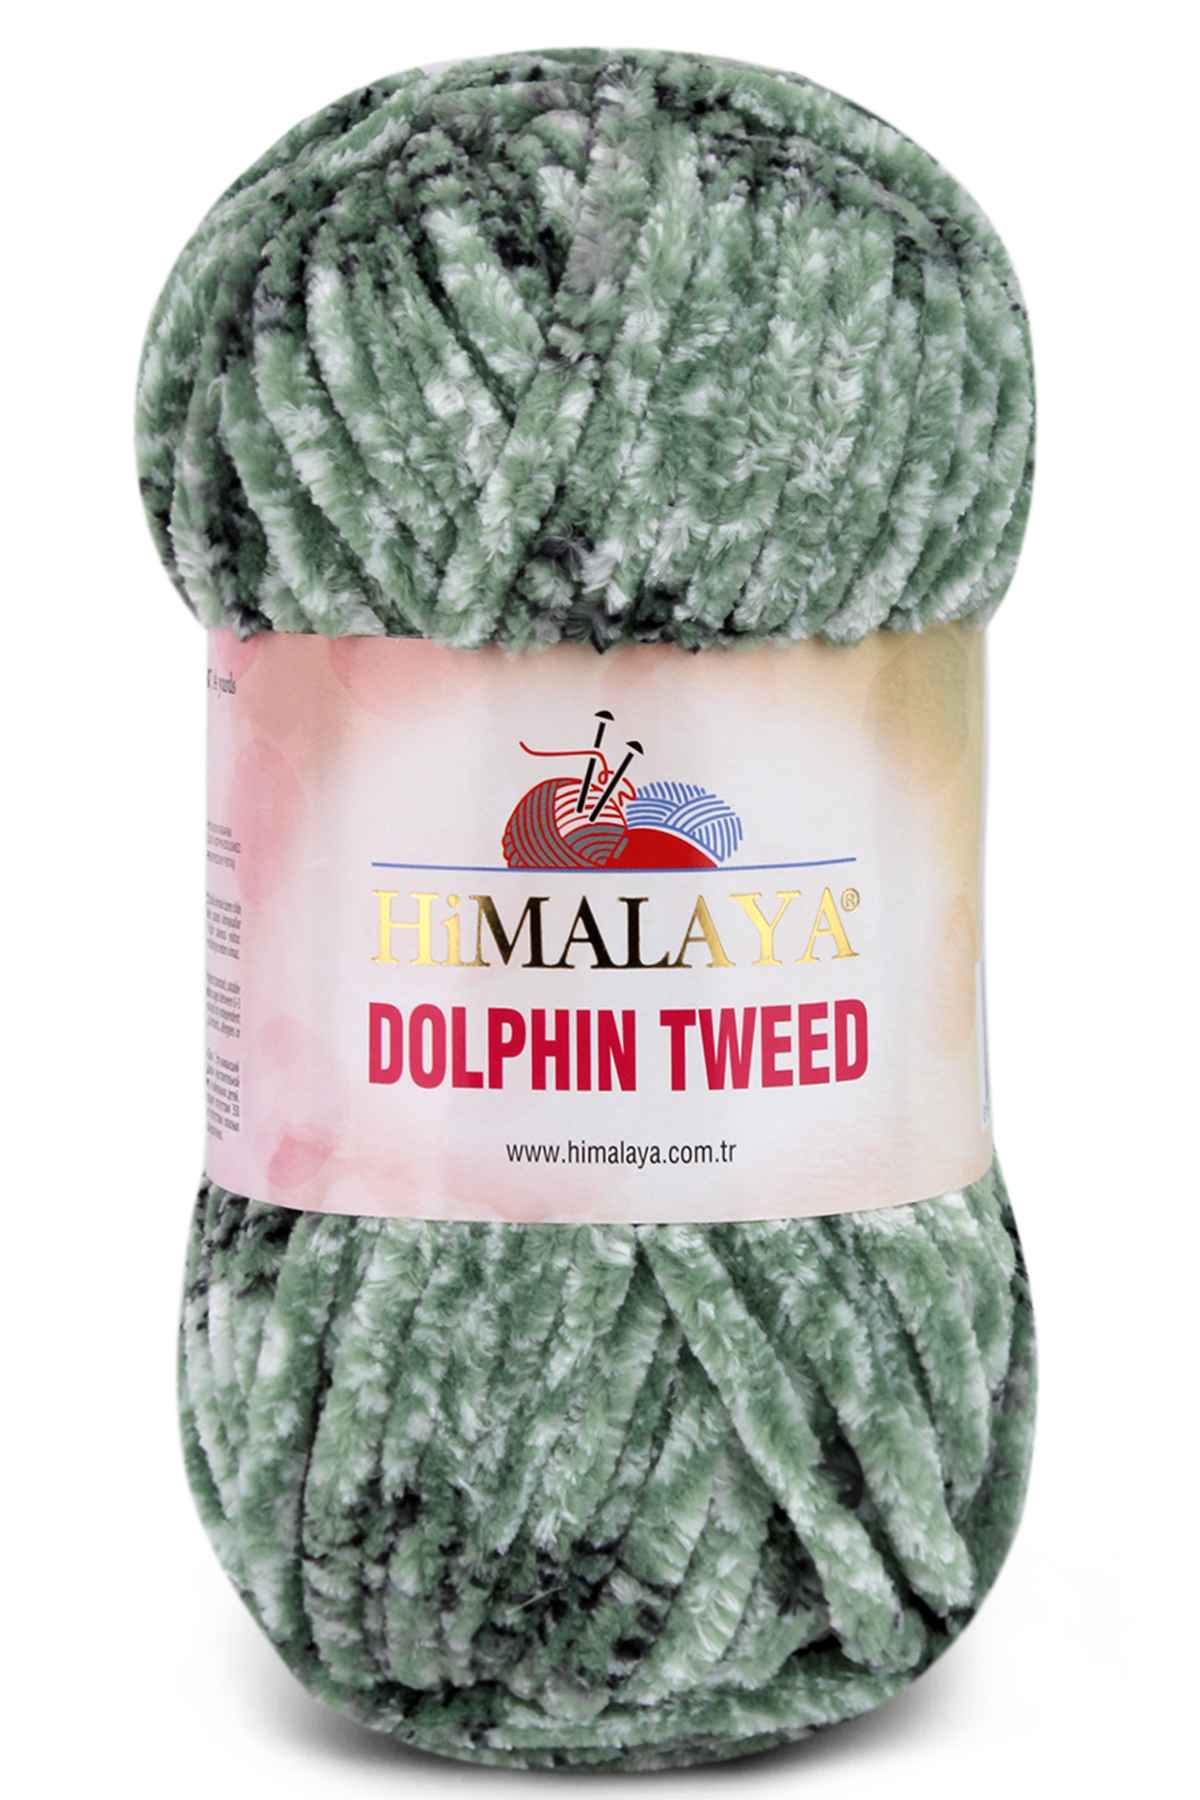 Himalaya Dolphin Tweed Velvet Yarn